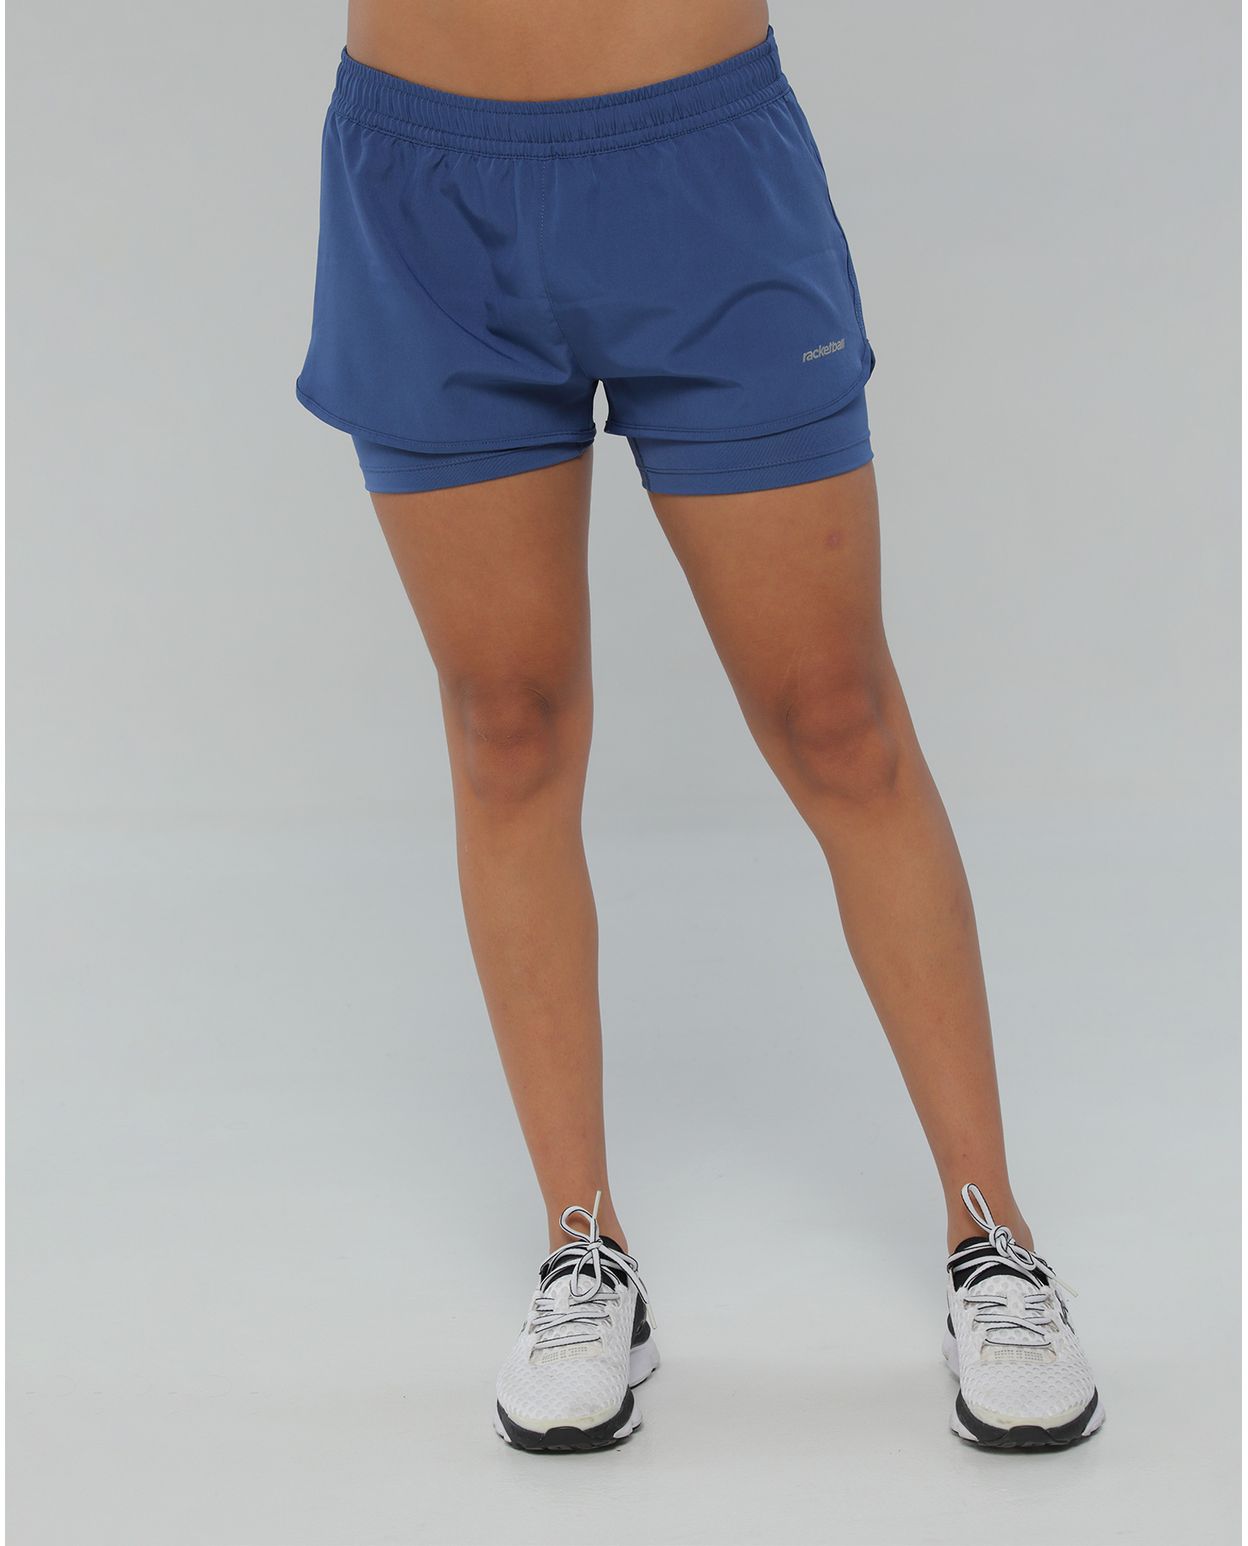 Pantaloneta mujer, con licra interior, color azul - racketball movil